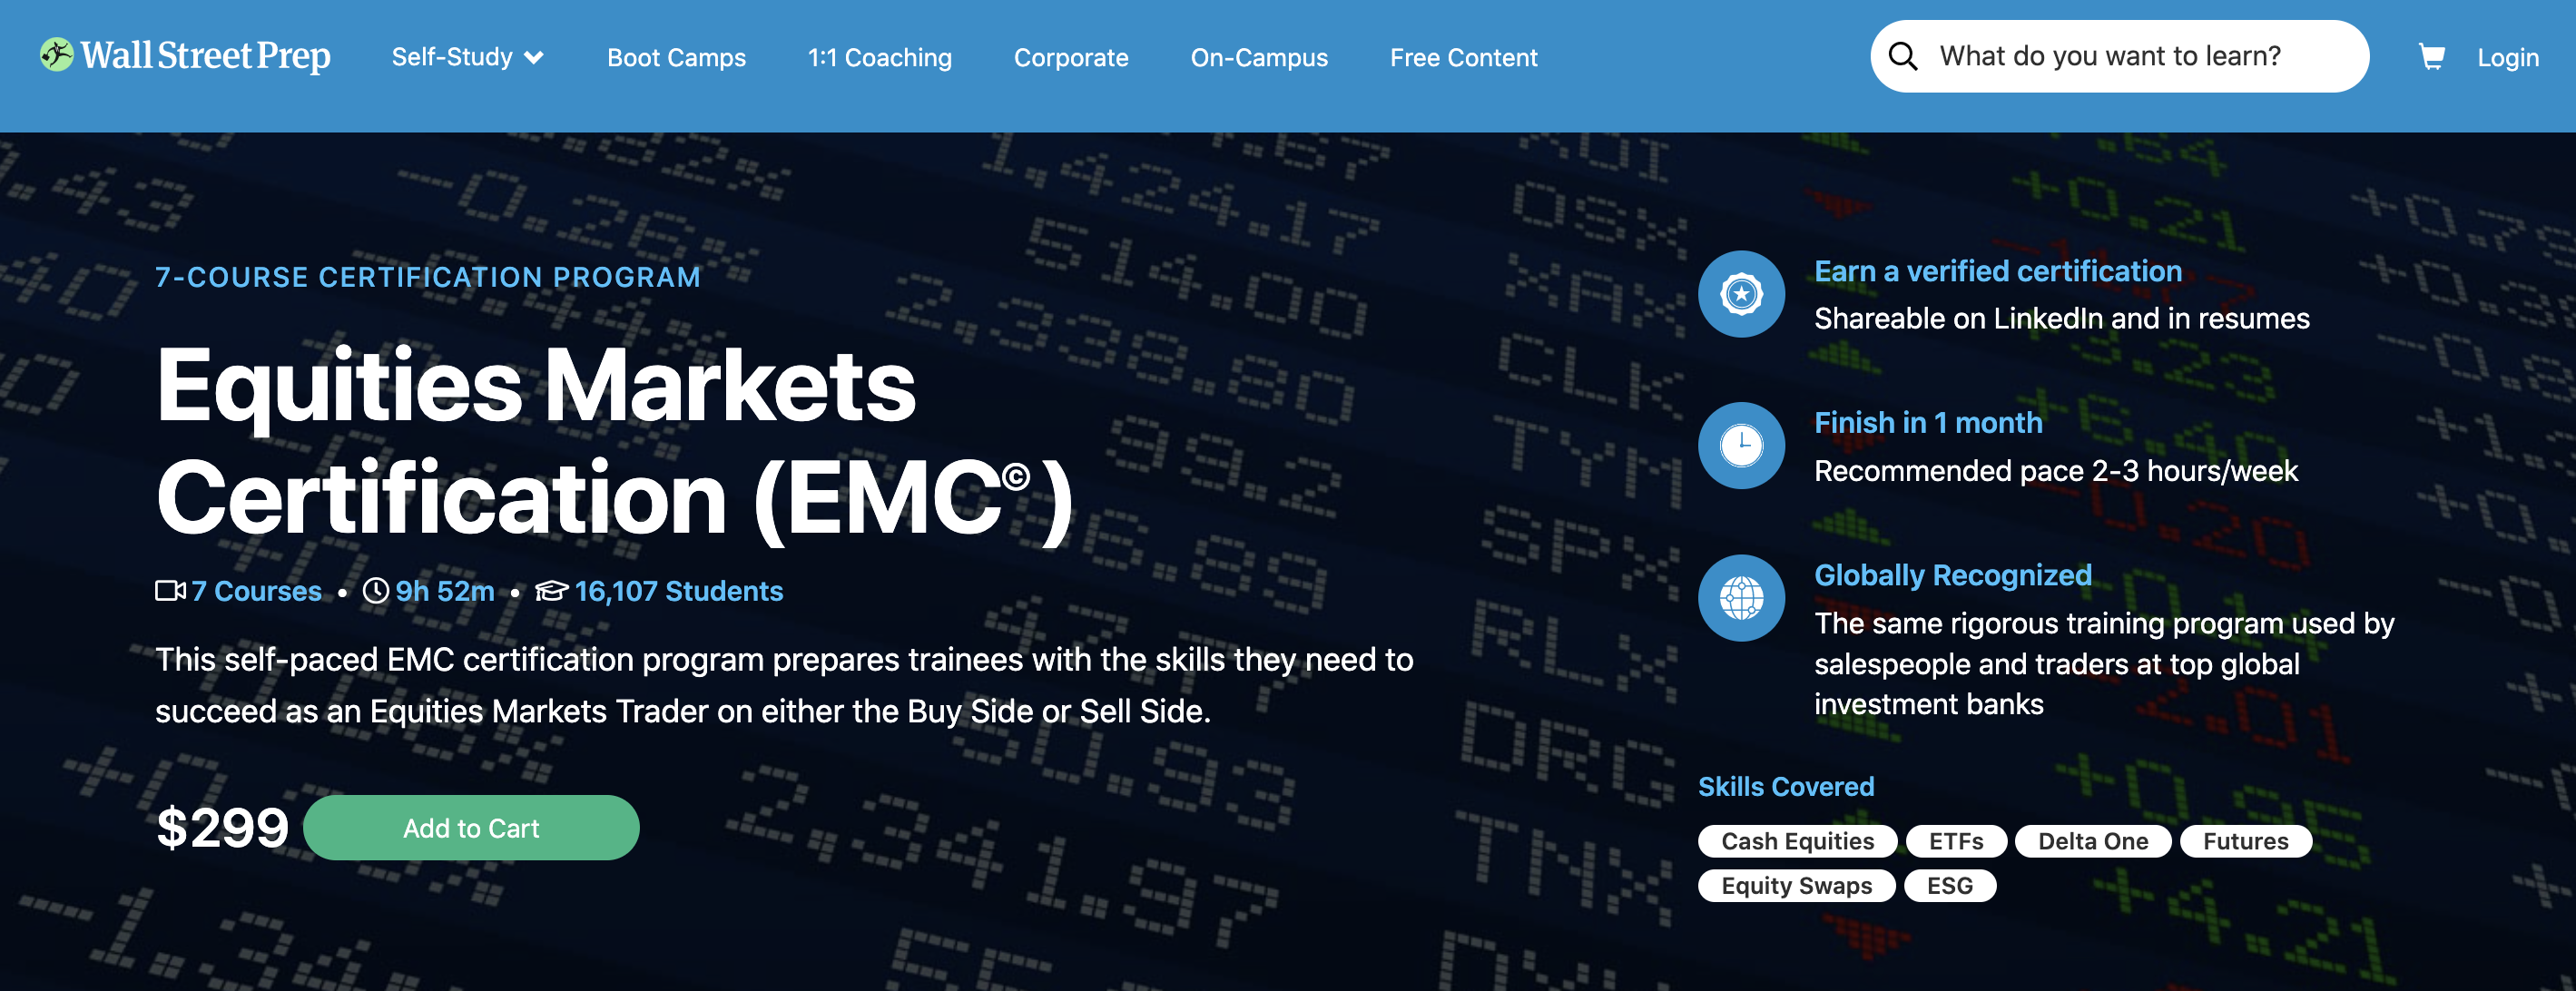 Equities Markets Certification -Bundle - Eric Cheung